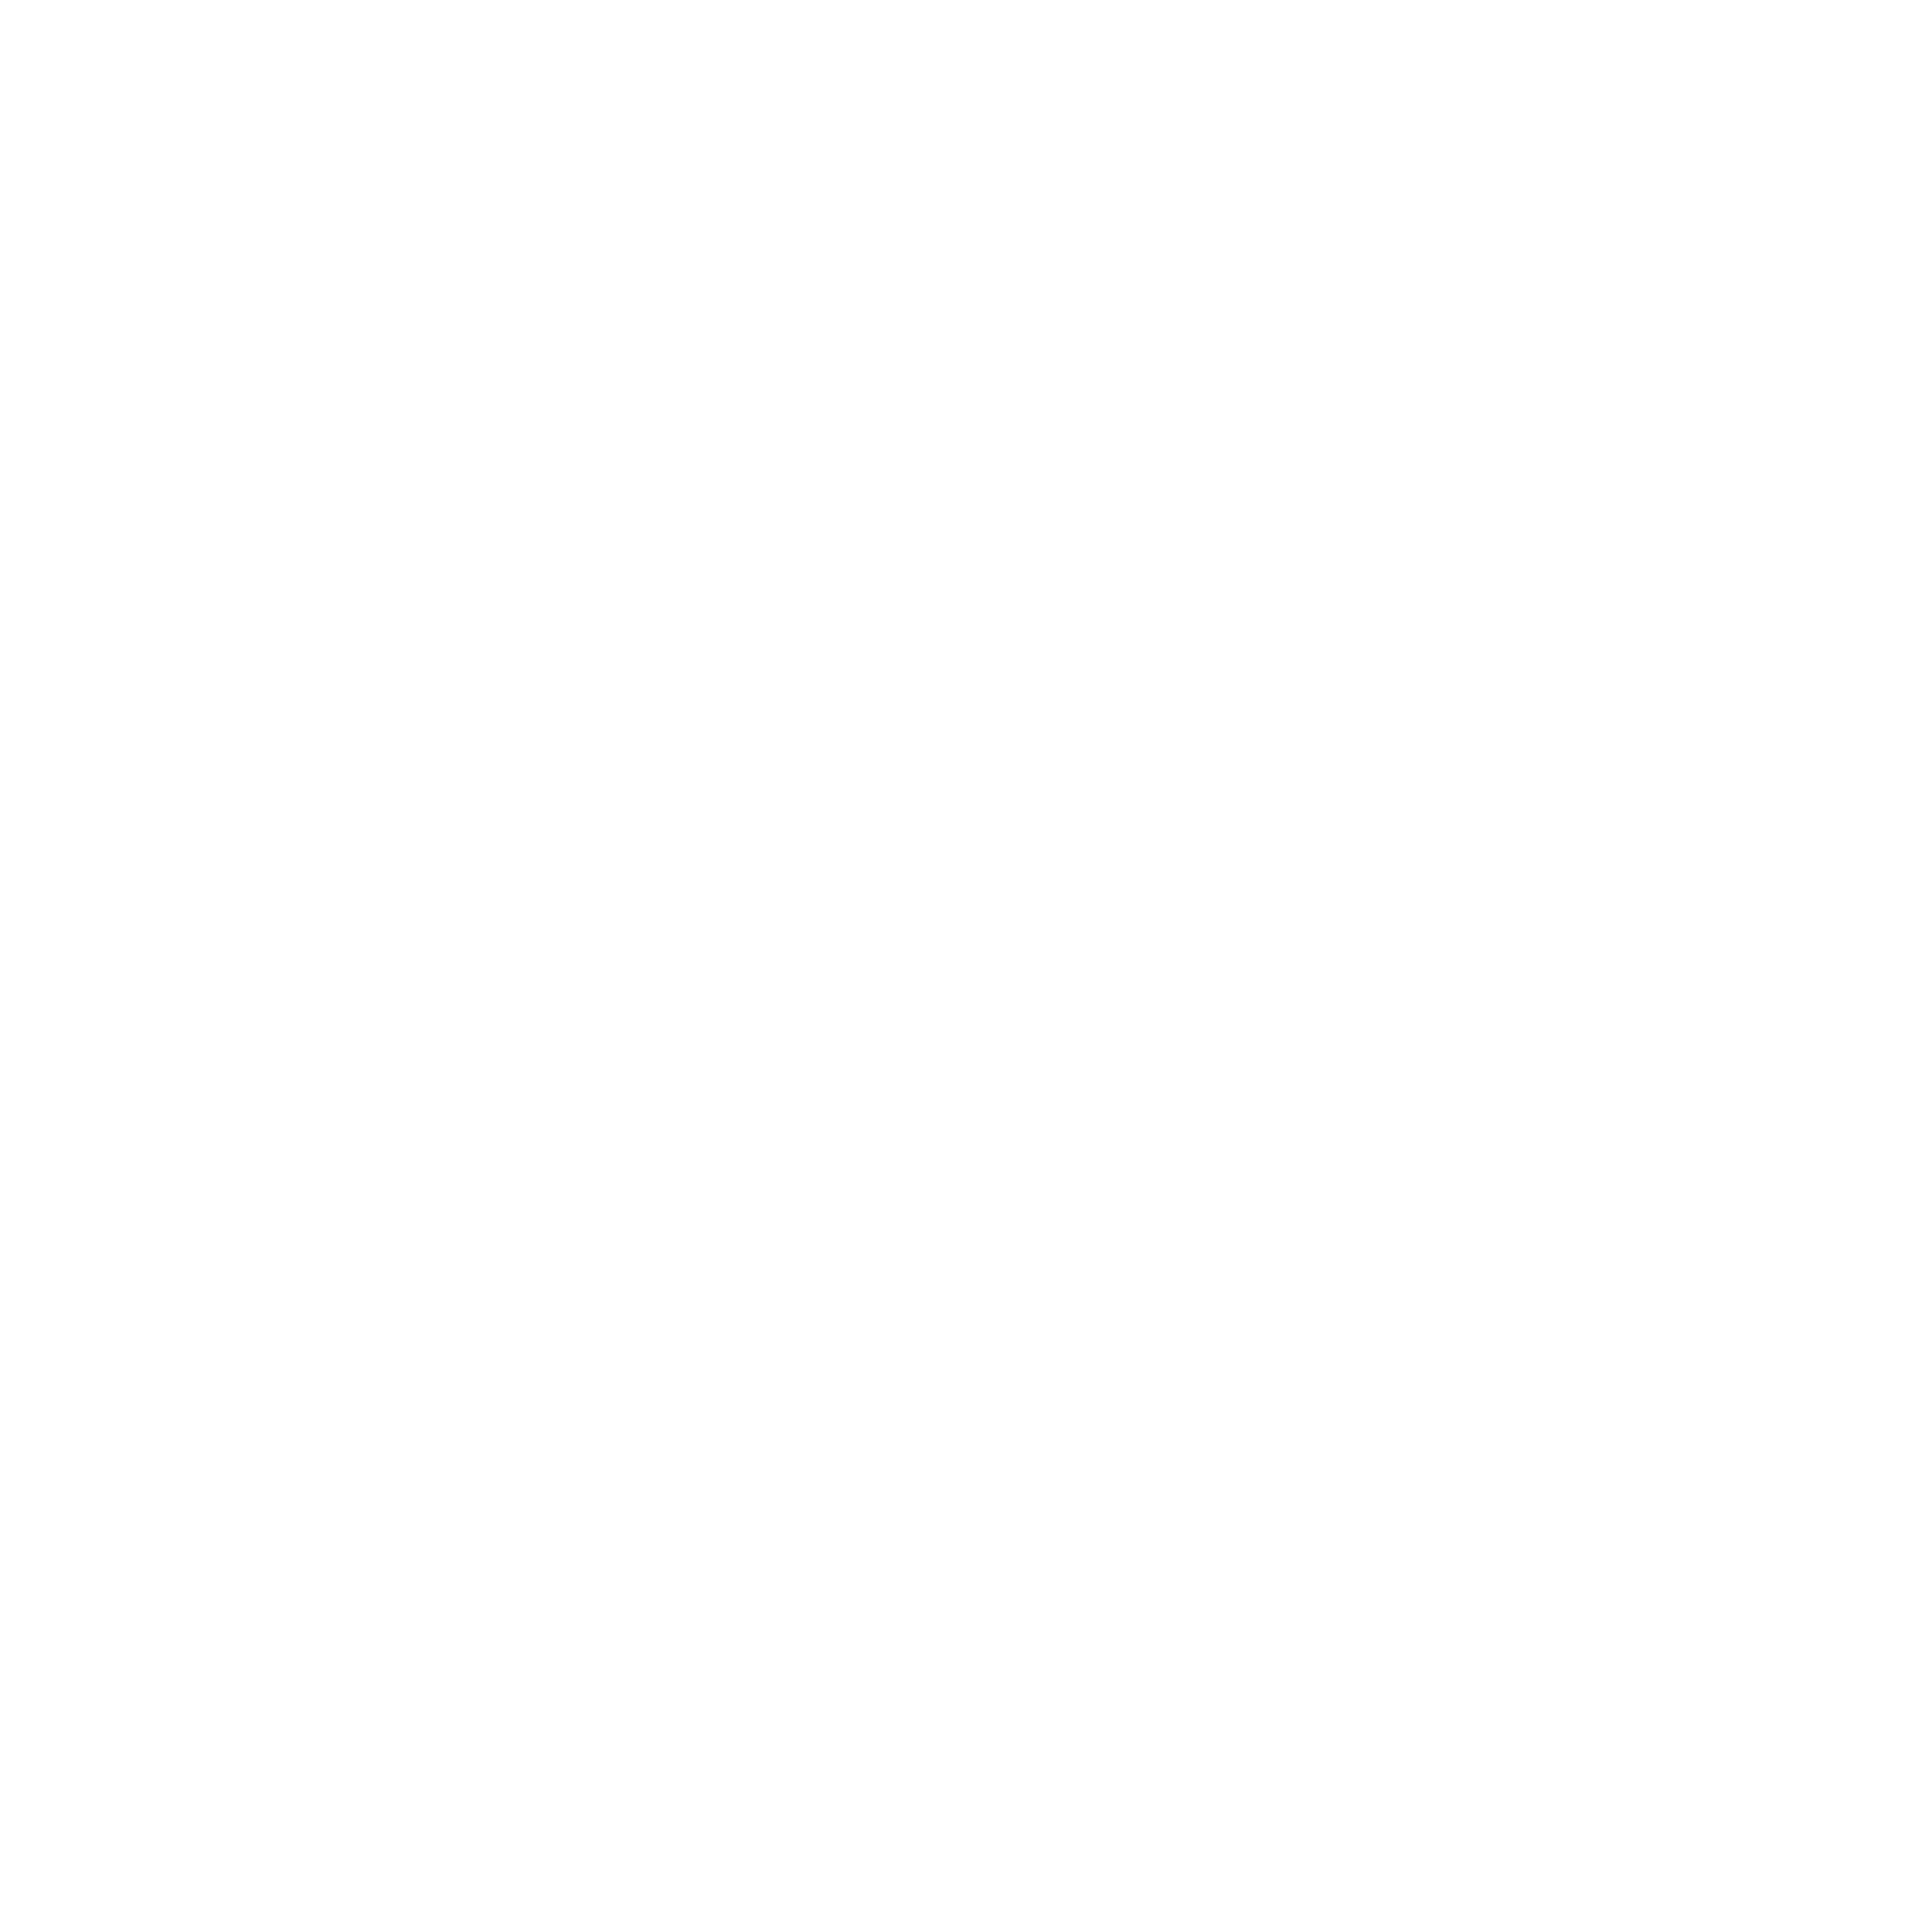 Corbis Logo - Corbis Logo PNG Transparent & SVG Vector